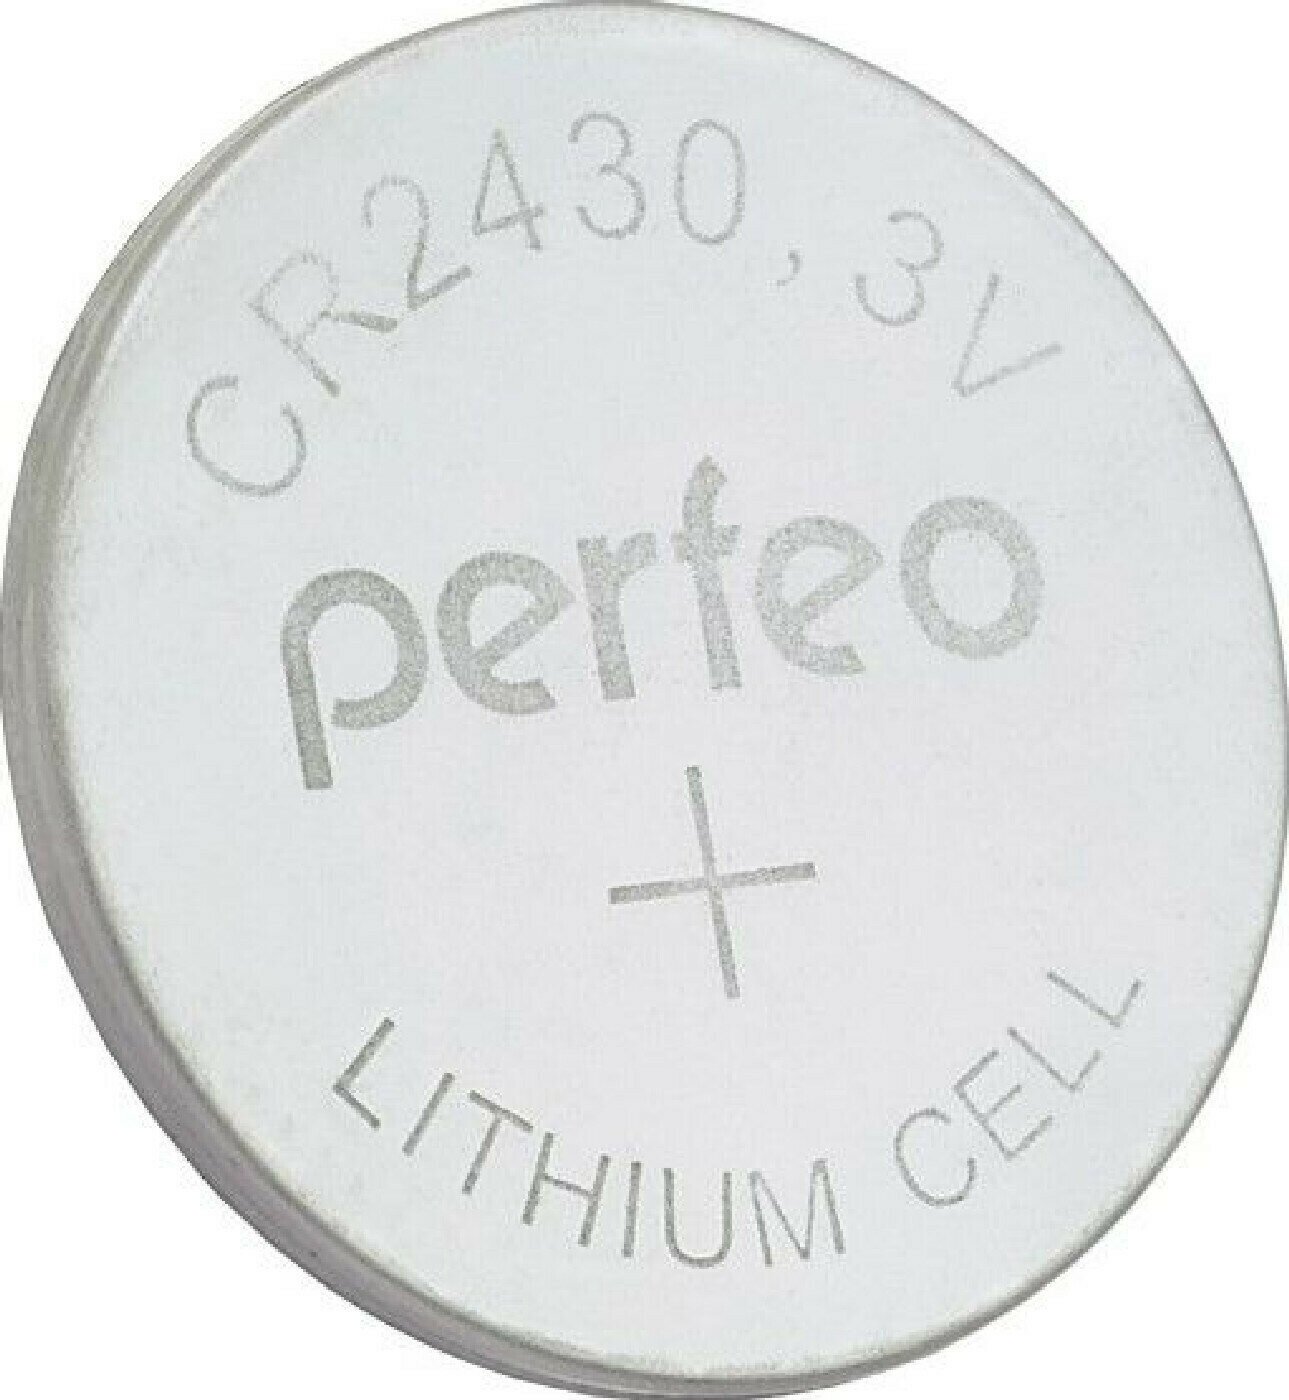 Батарейка Батарейка CR2430 литиевая Perfeo CR2430/5BL Lithium Cell 5 шт